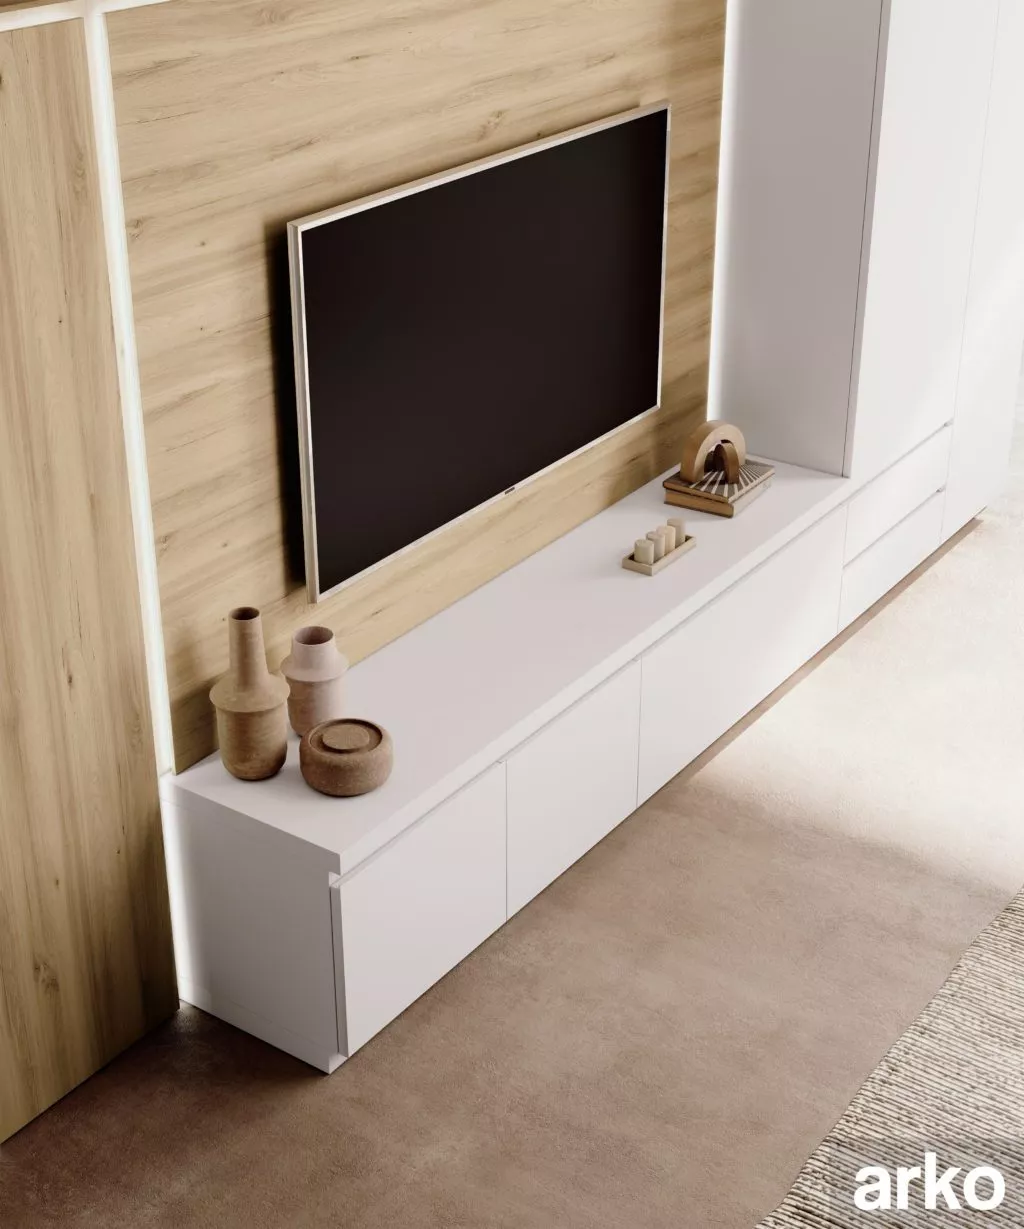 Detalle del mueble blanco luminoso con panel TV